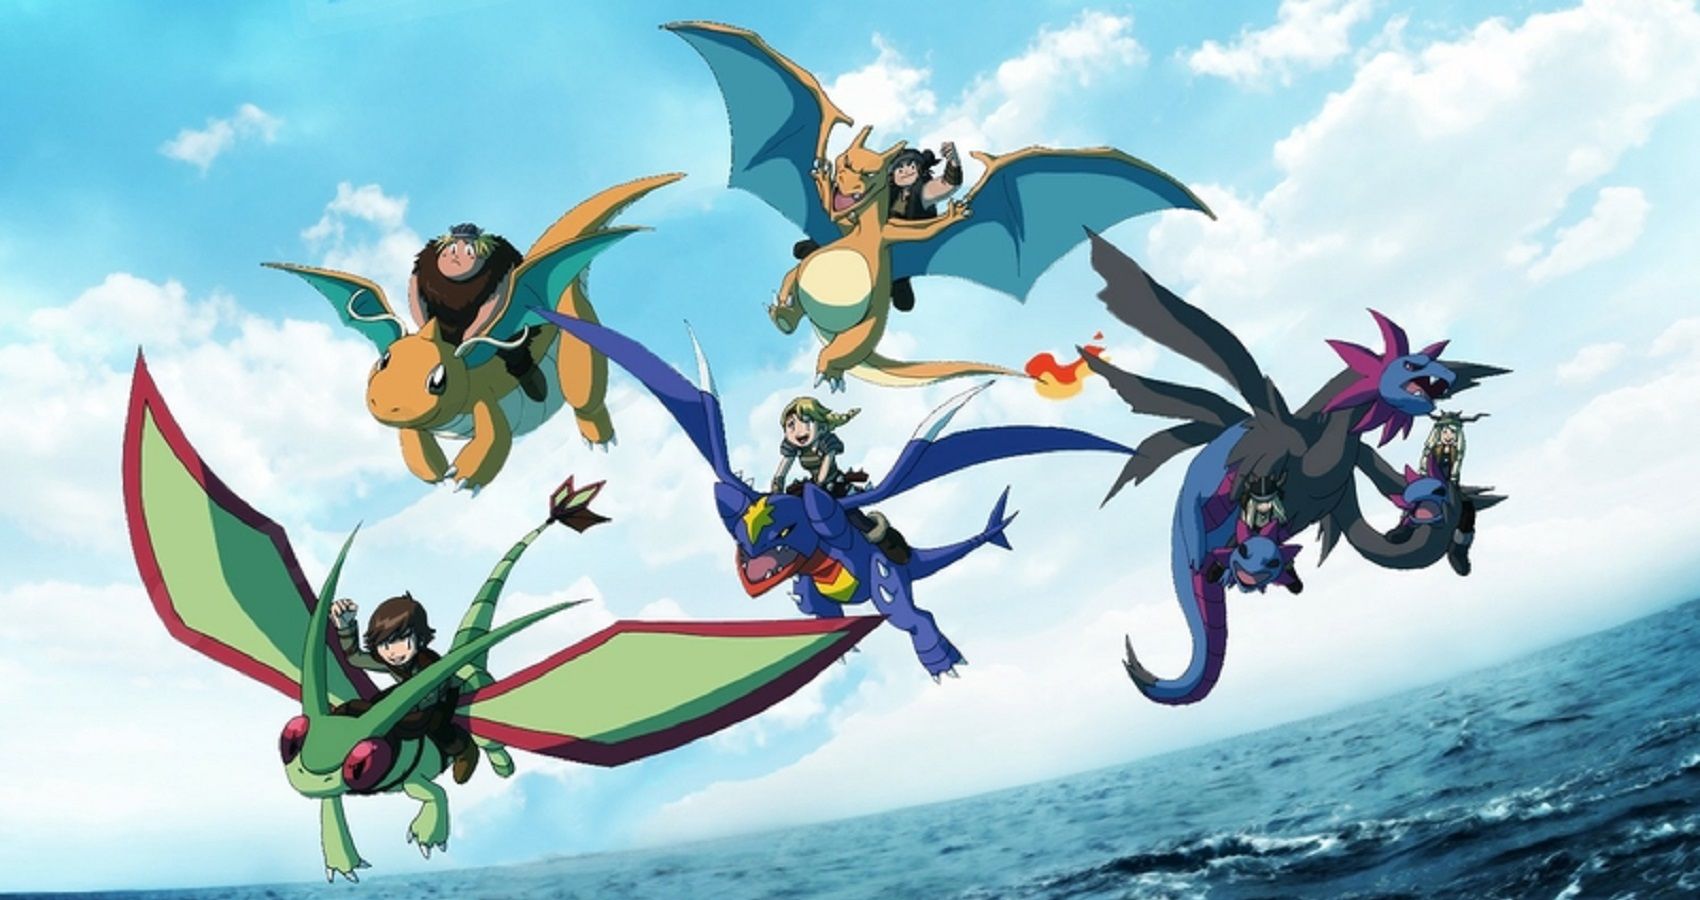 5 popular Dragon-type Pokemon yet to release in Pokemon GO